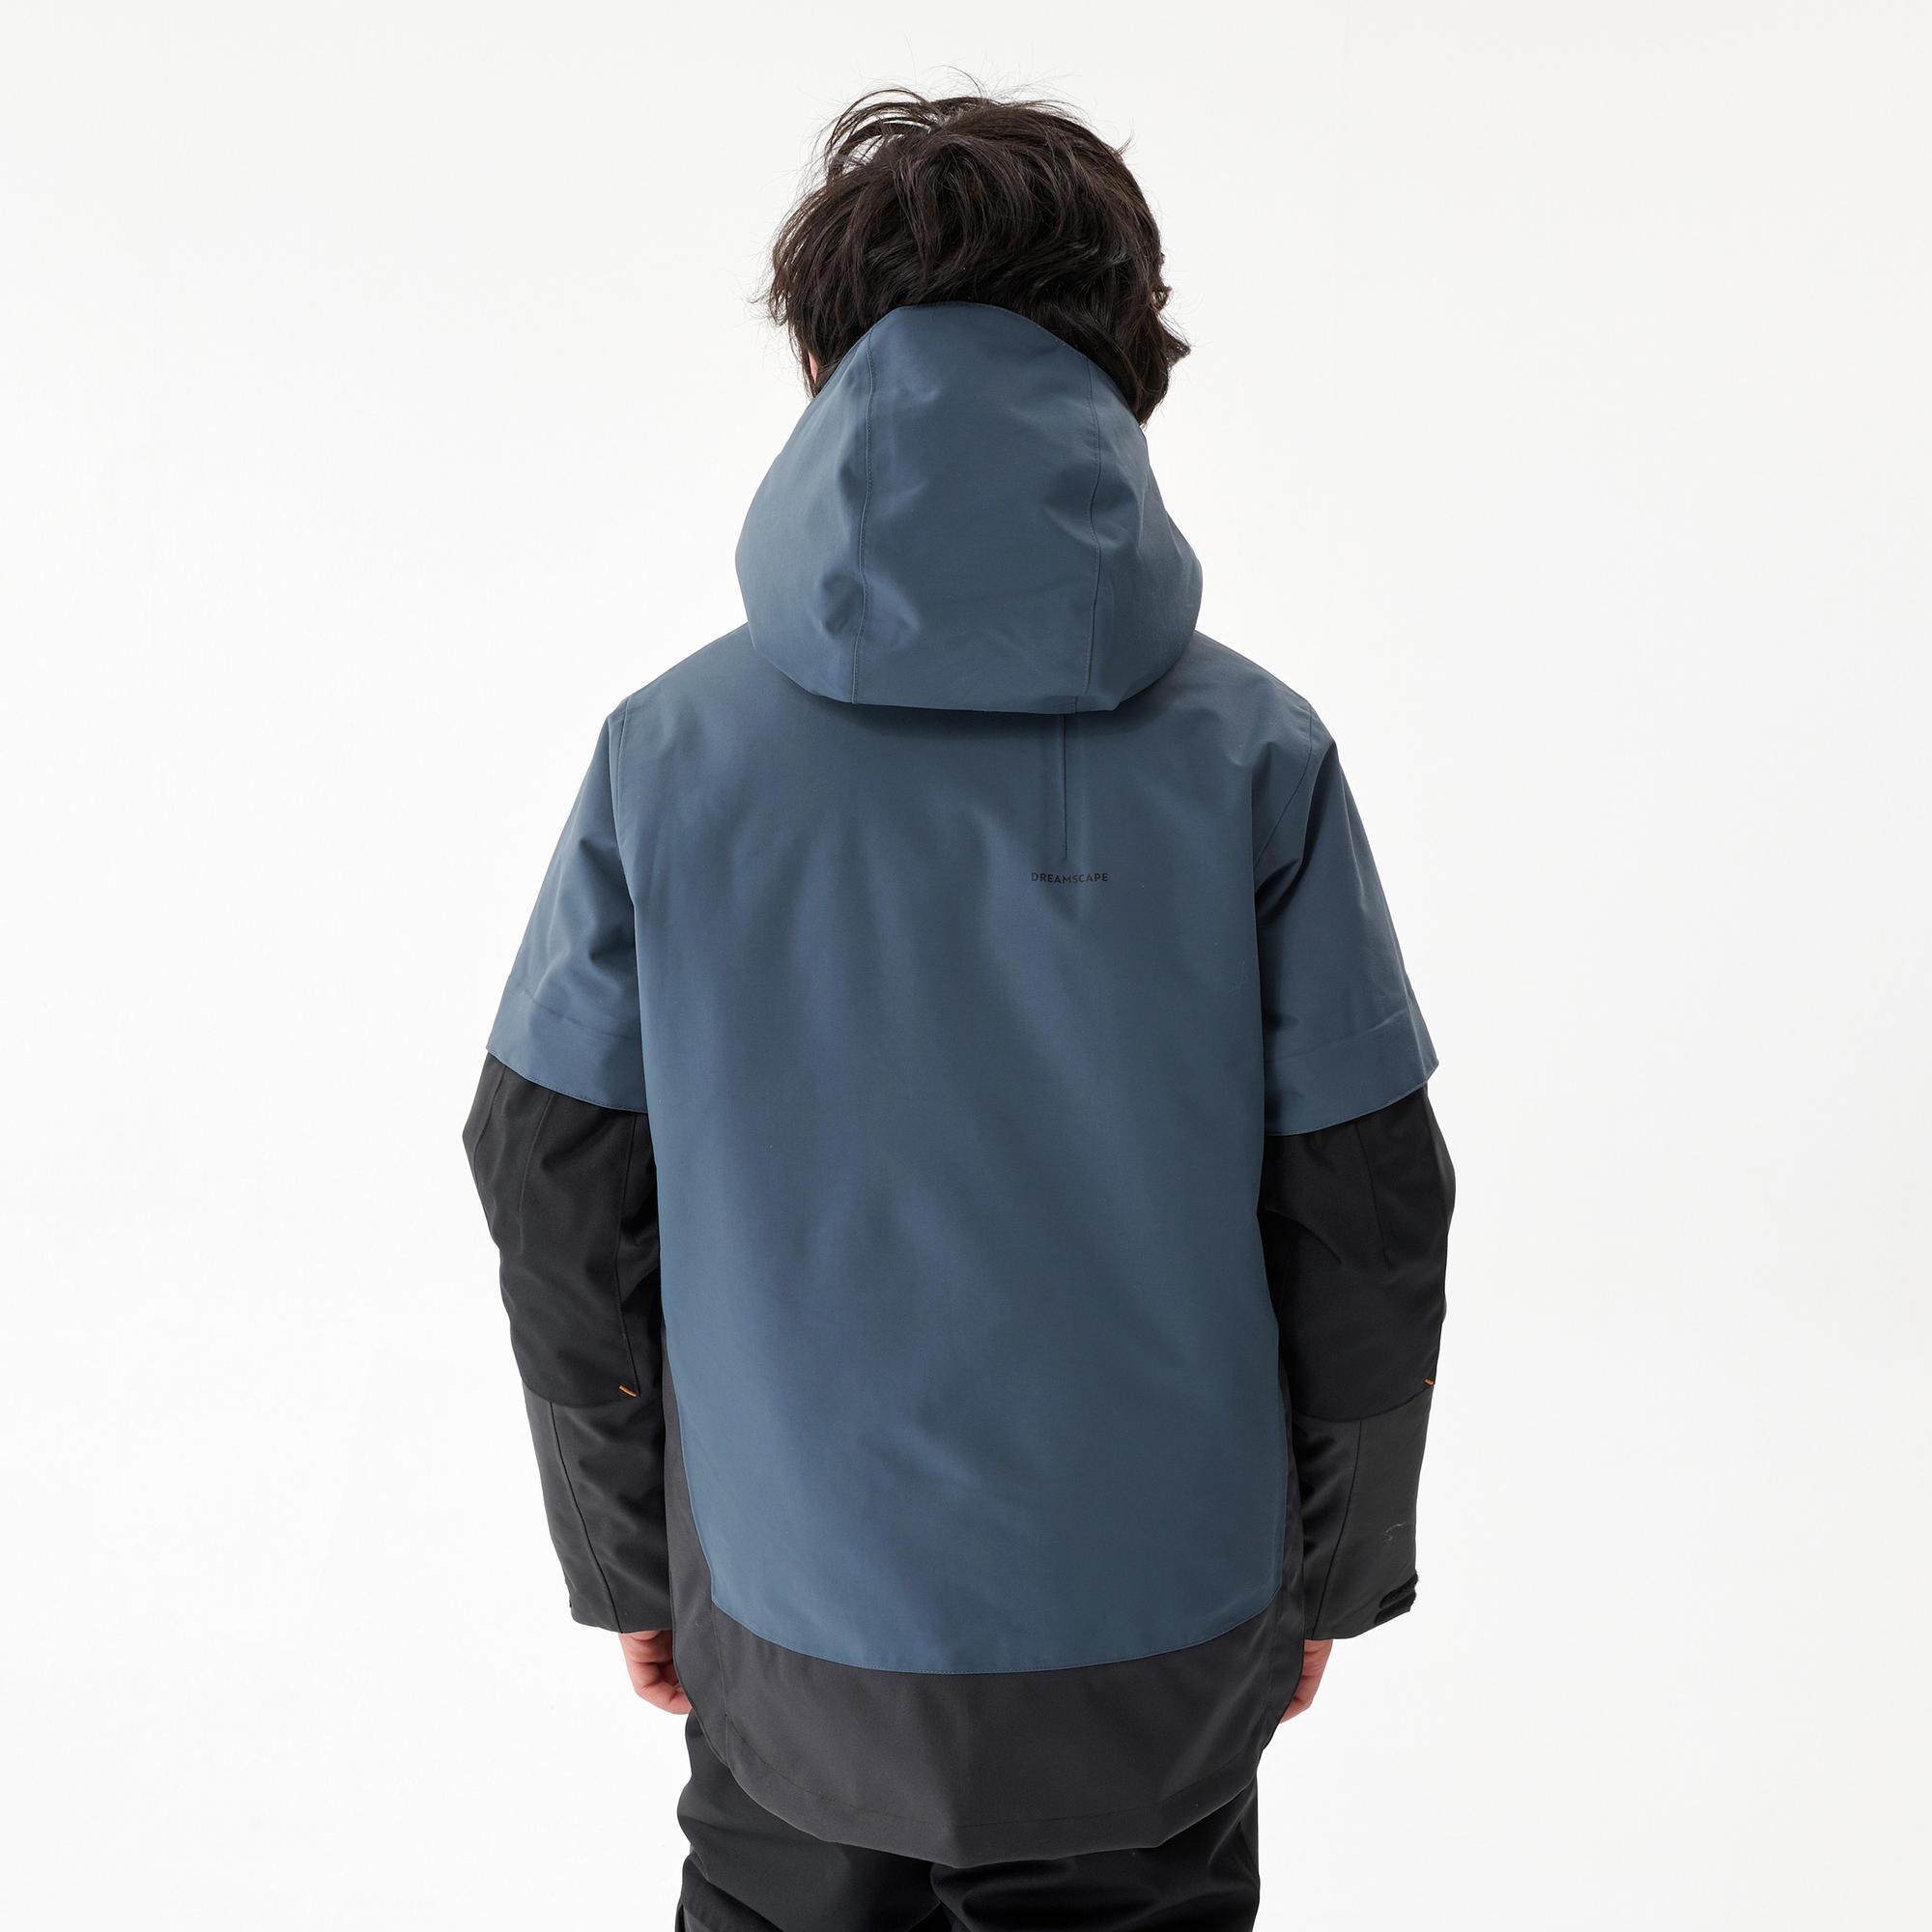 Kids’ Snowboard Jacket - SNB 500 Teen Boy - Blue 4/15